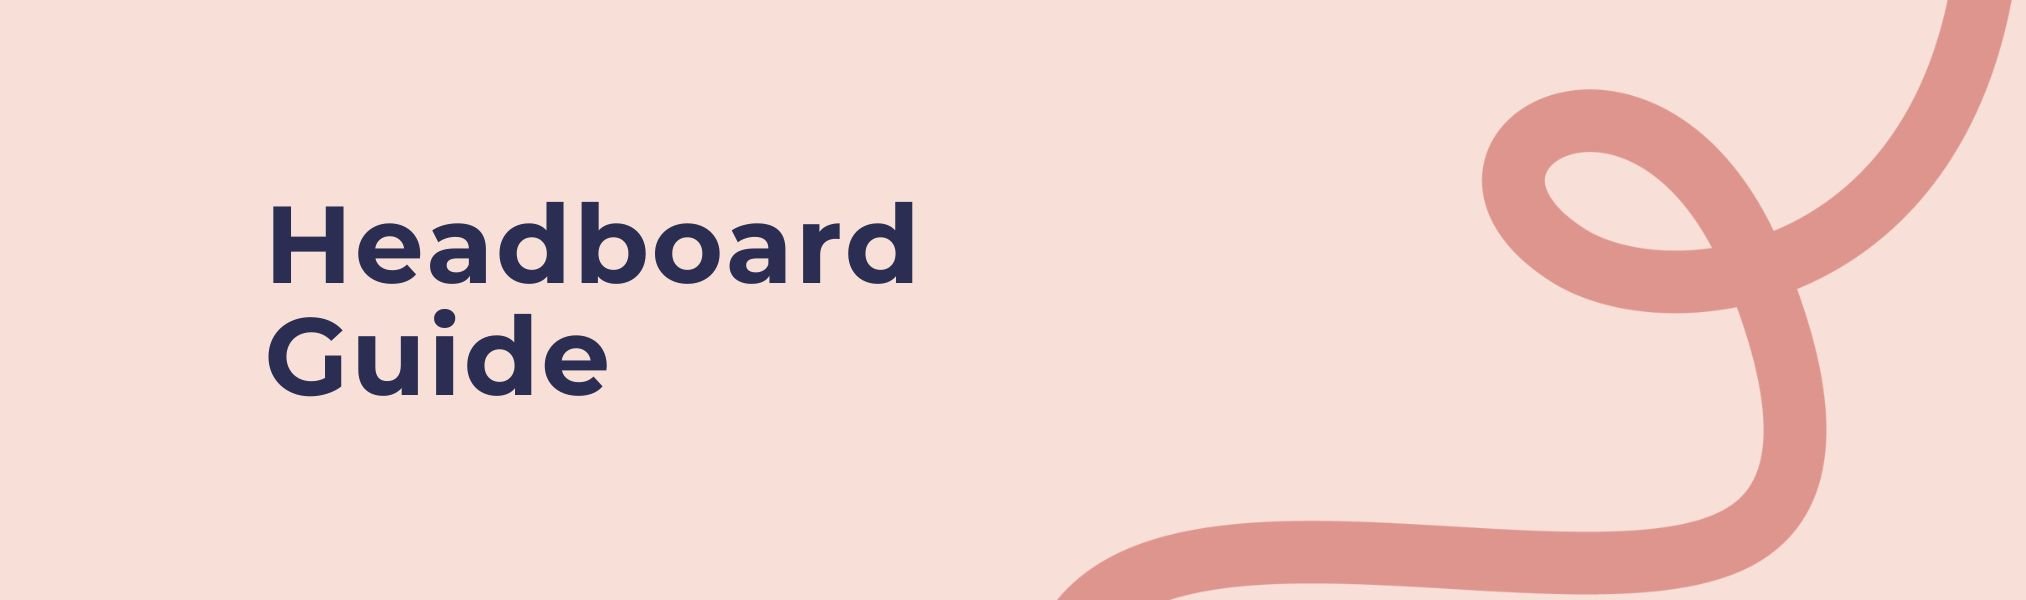 Headboard Guide: Why Buy a Headboard? 